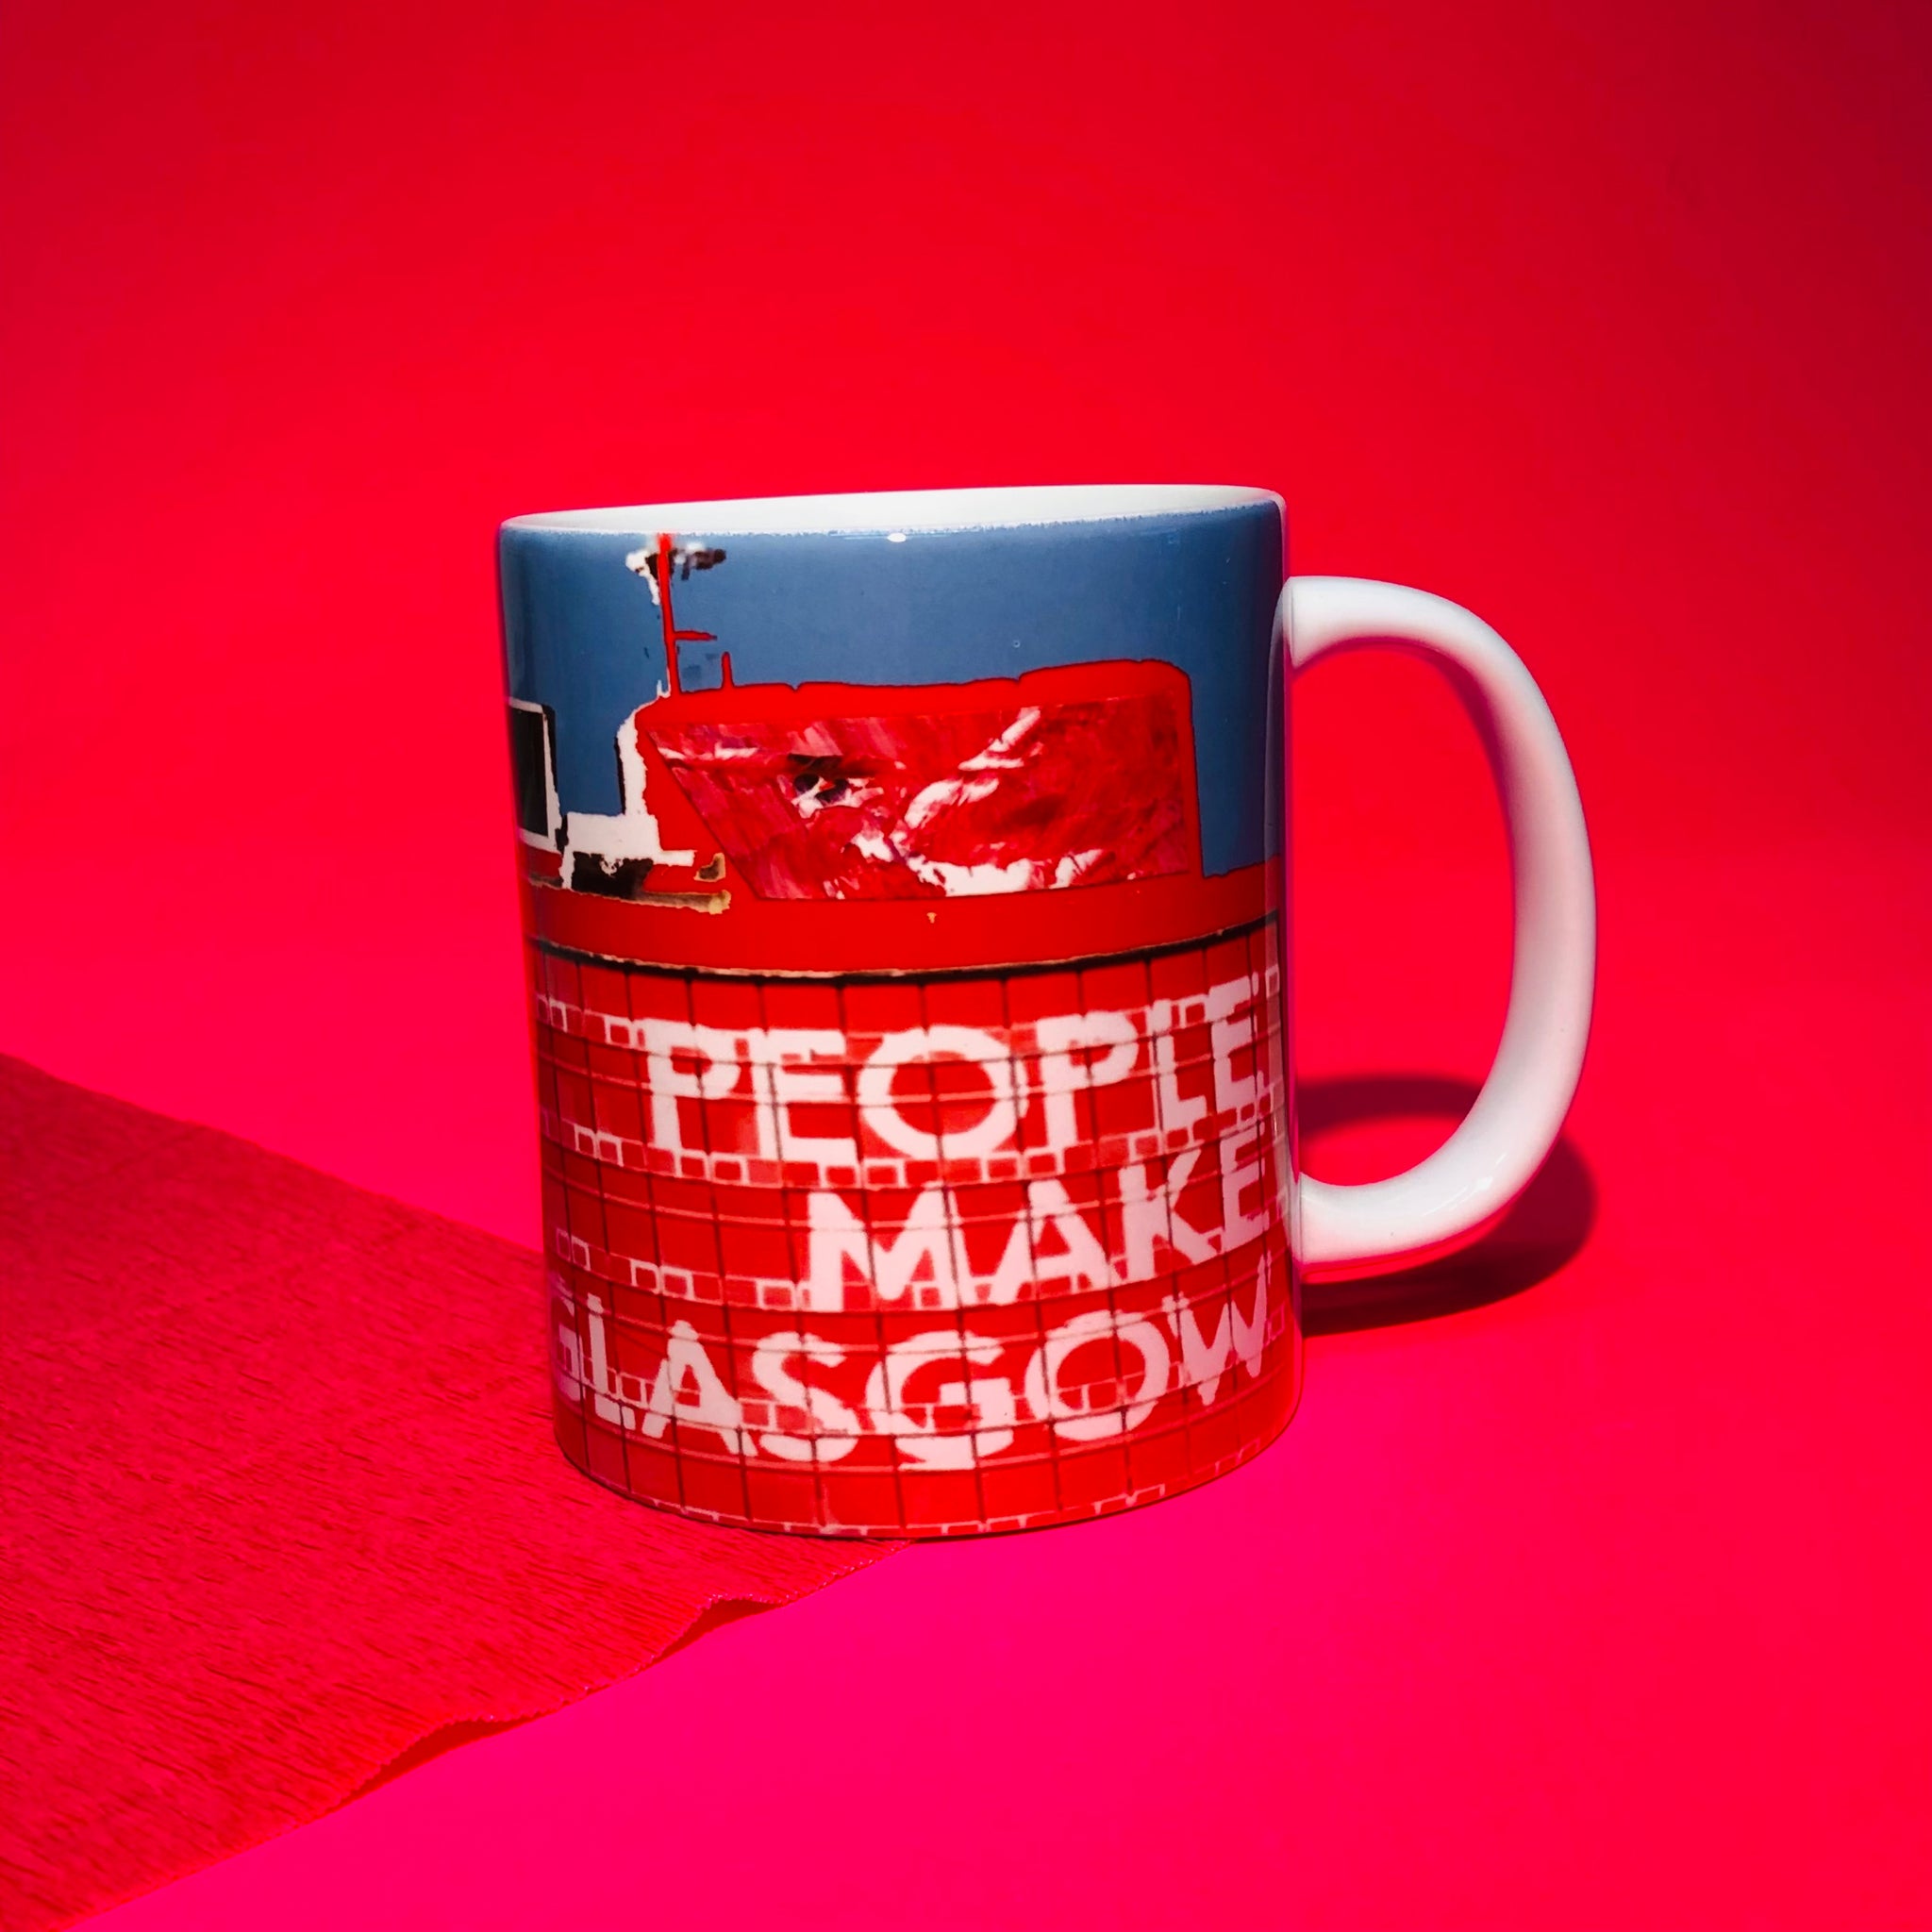 People Make Glasgow Mug